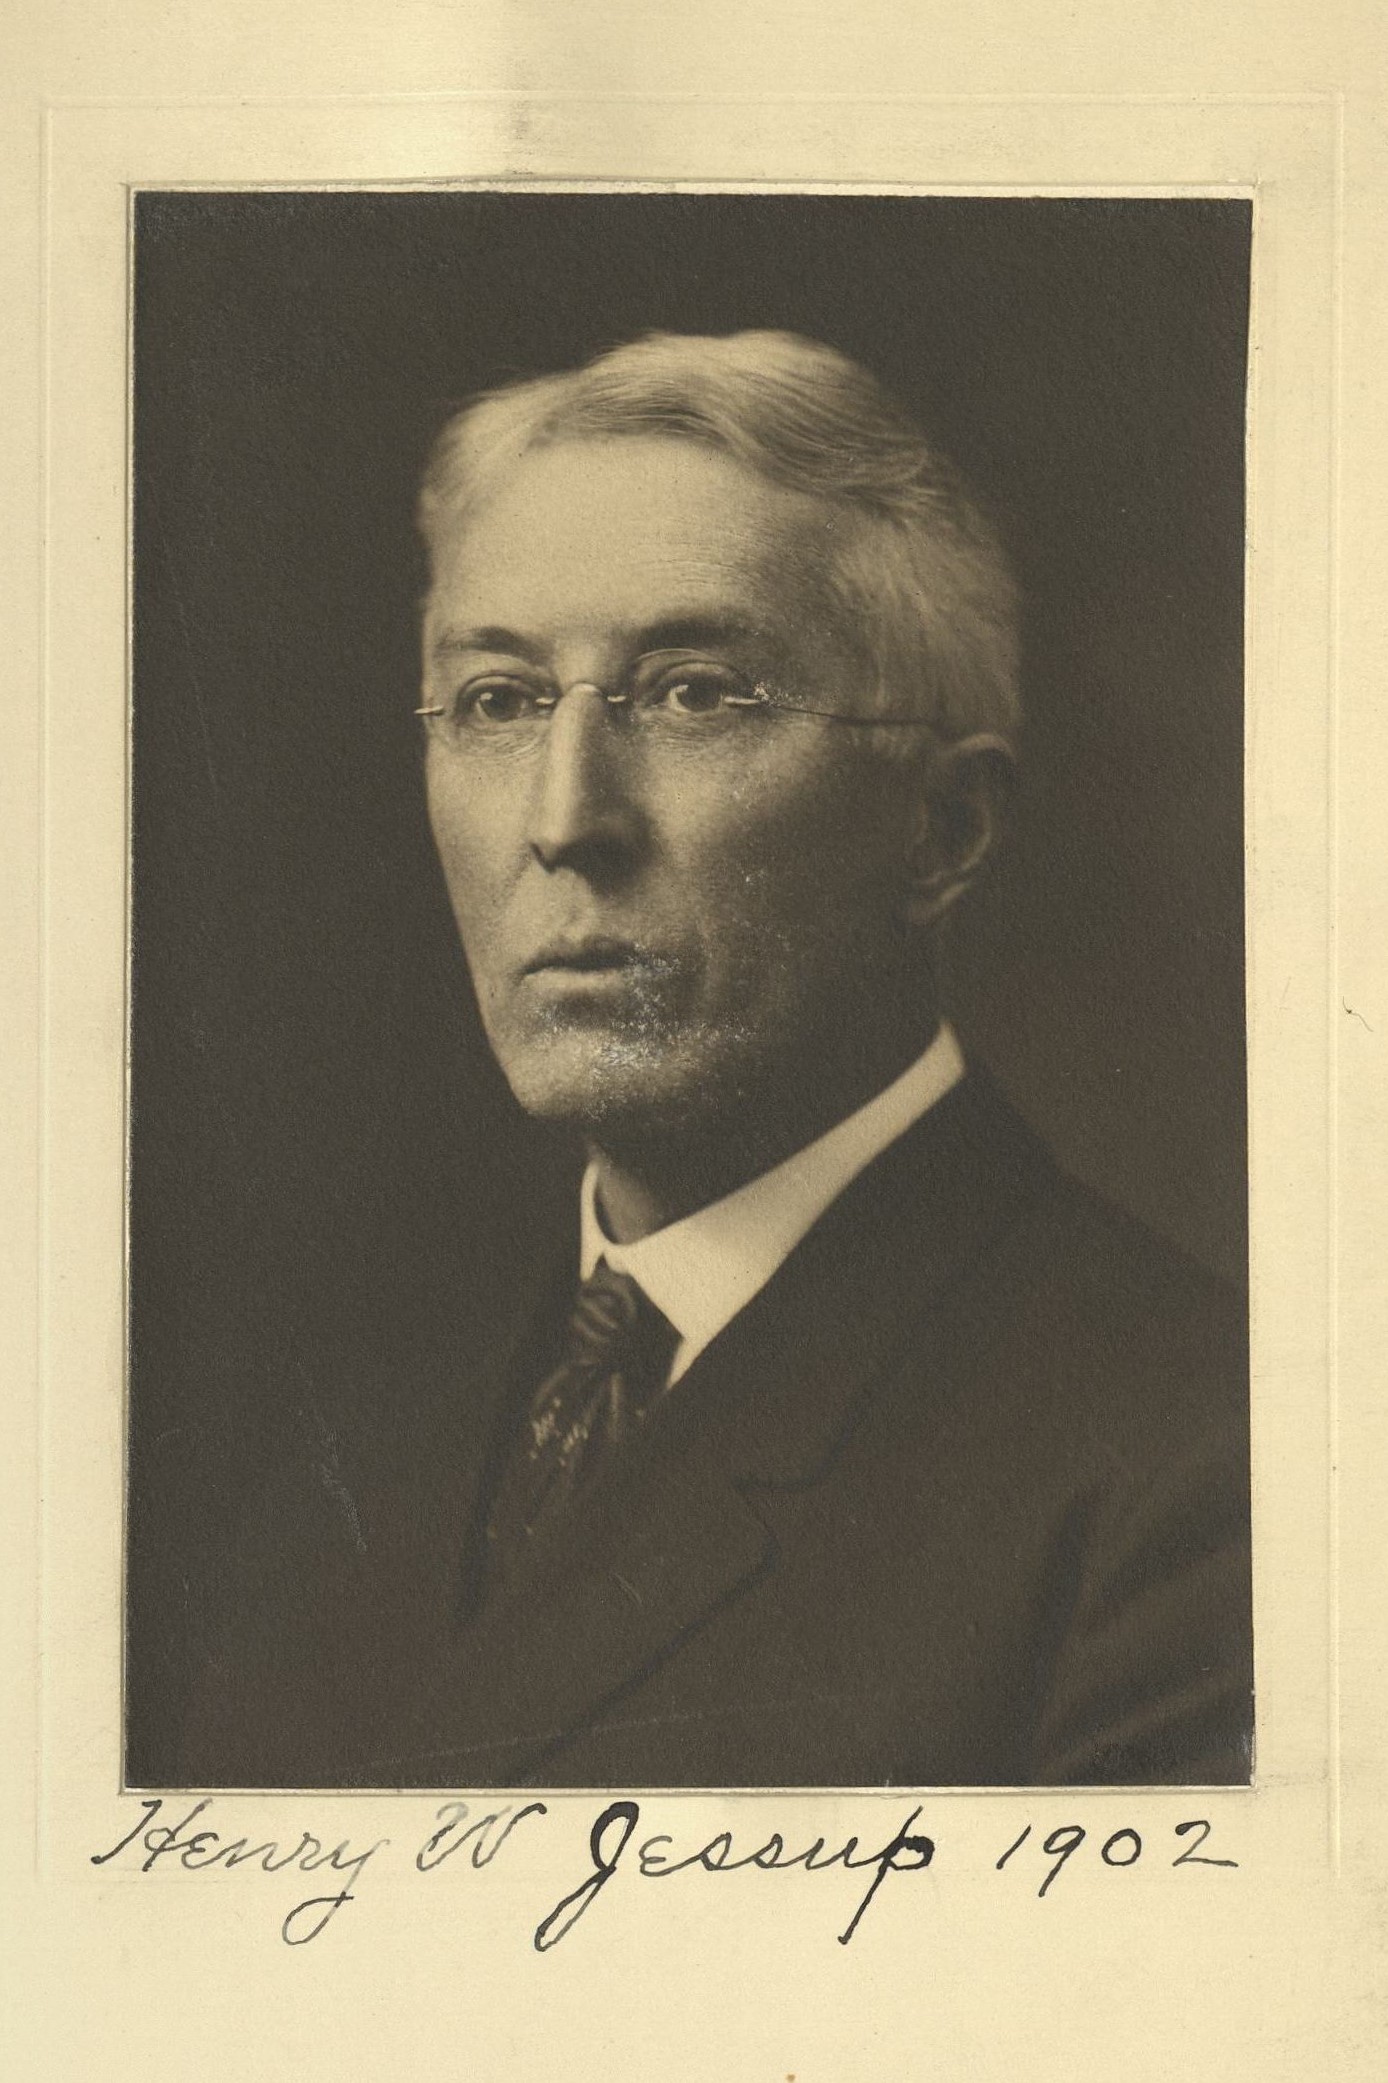 Member portrait of Henry W. Jessup